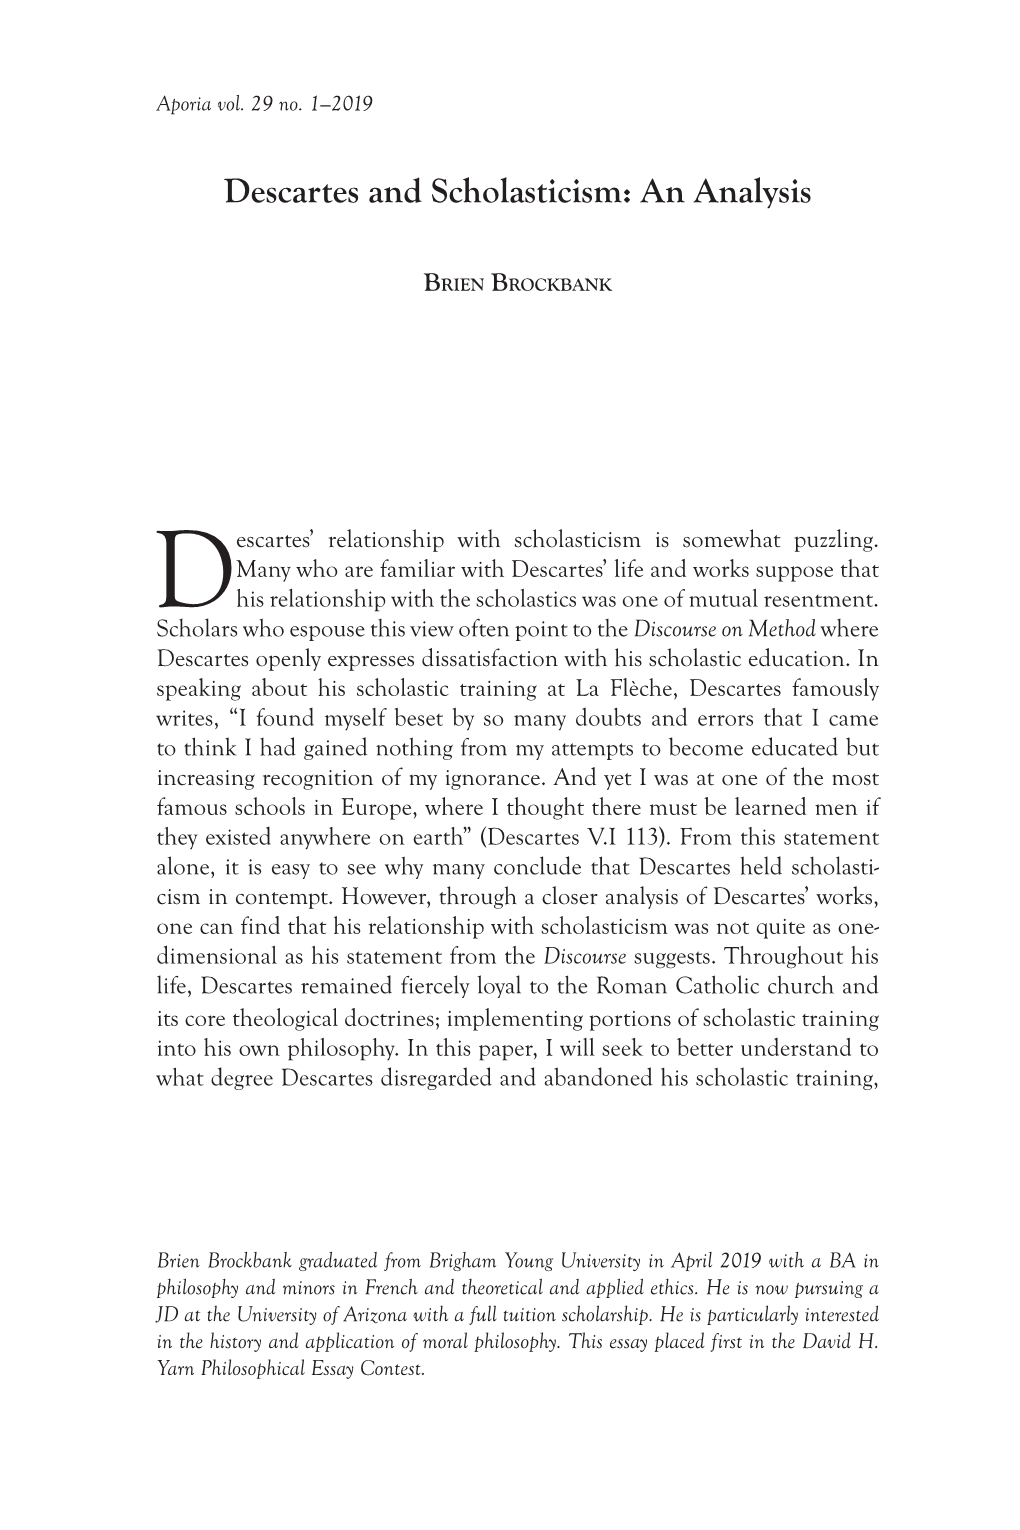 Descartes and Scholasticism: an Analysis